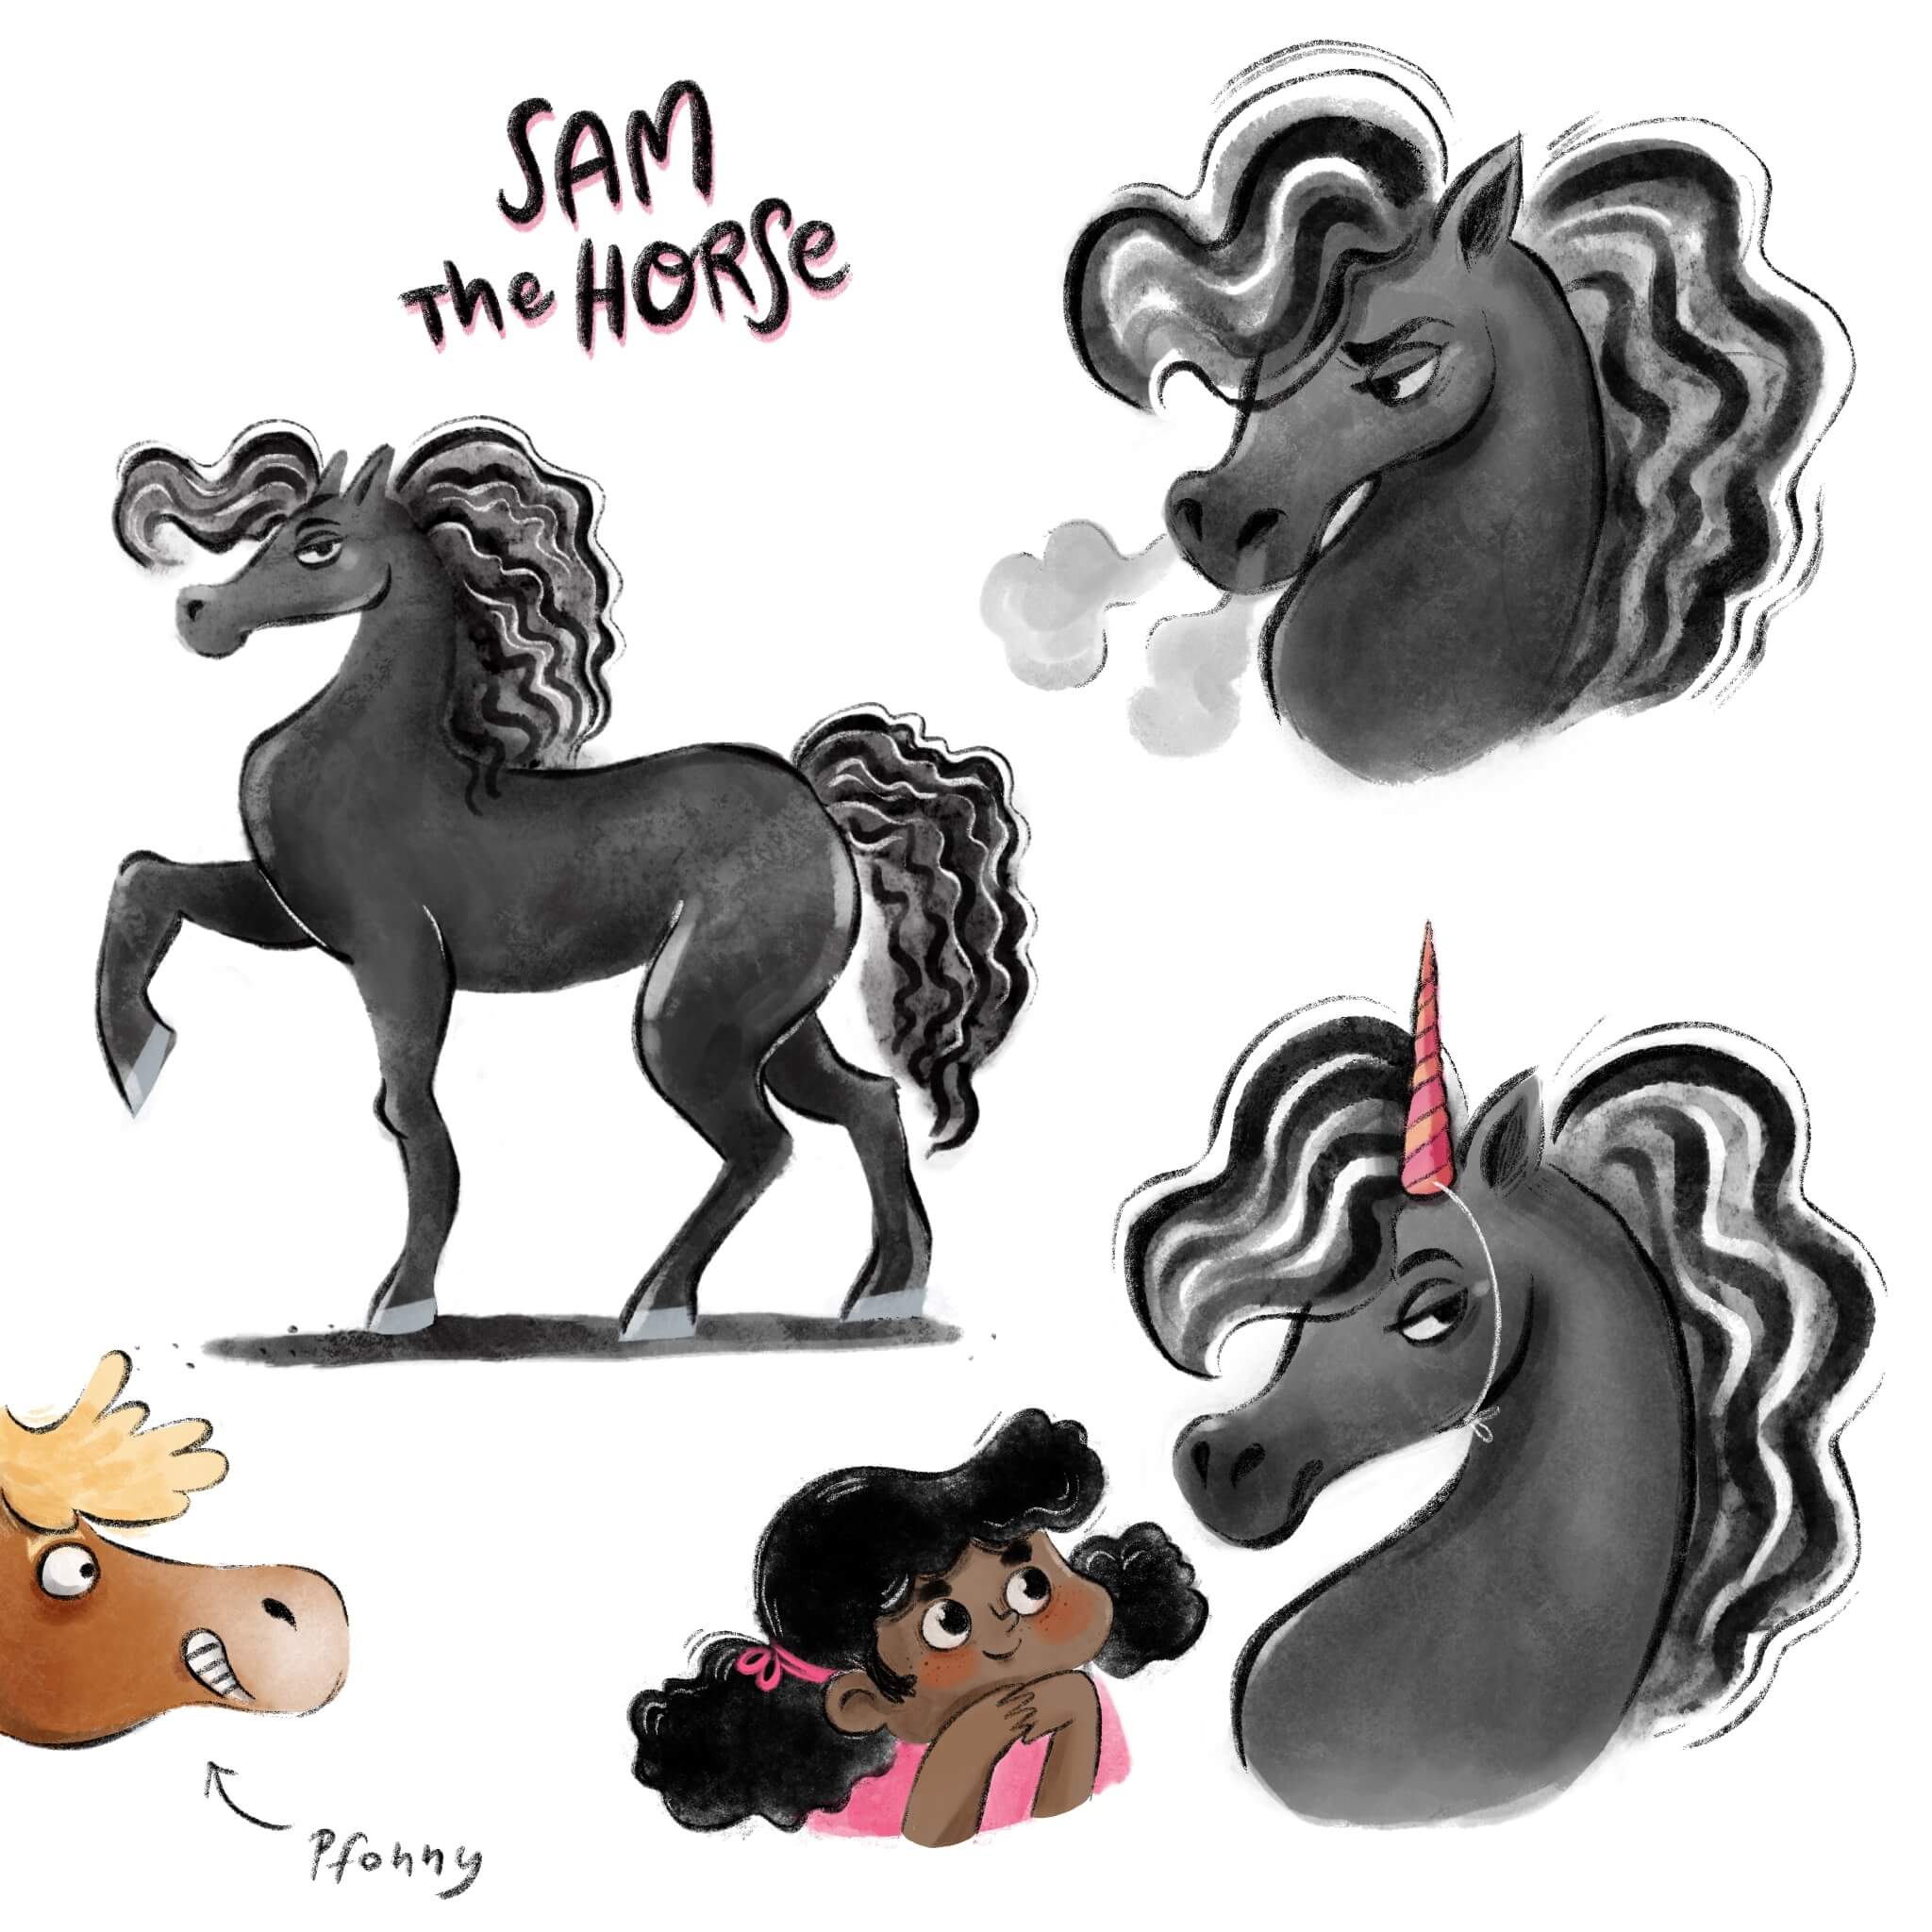 charactersheet of a black horse named sam